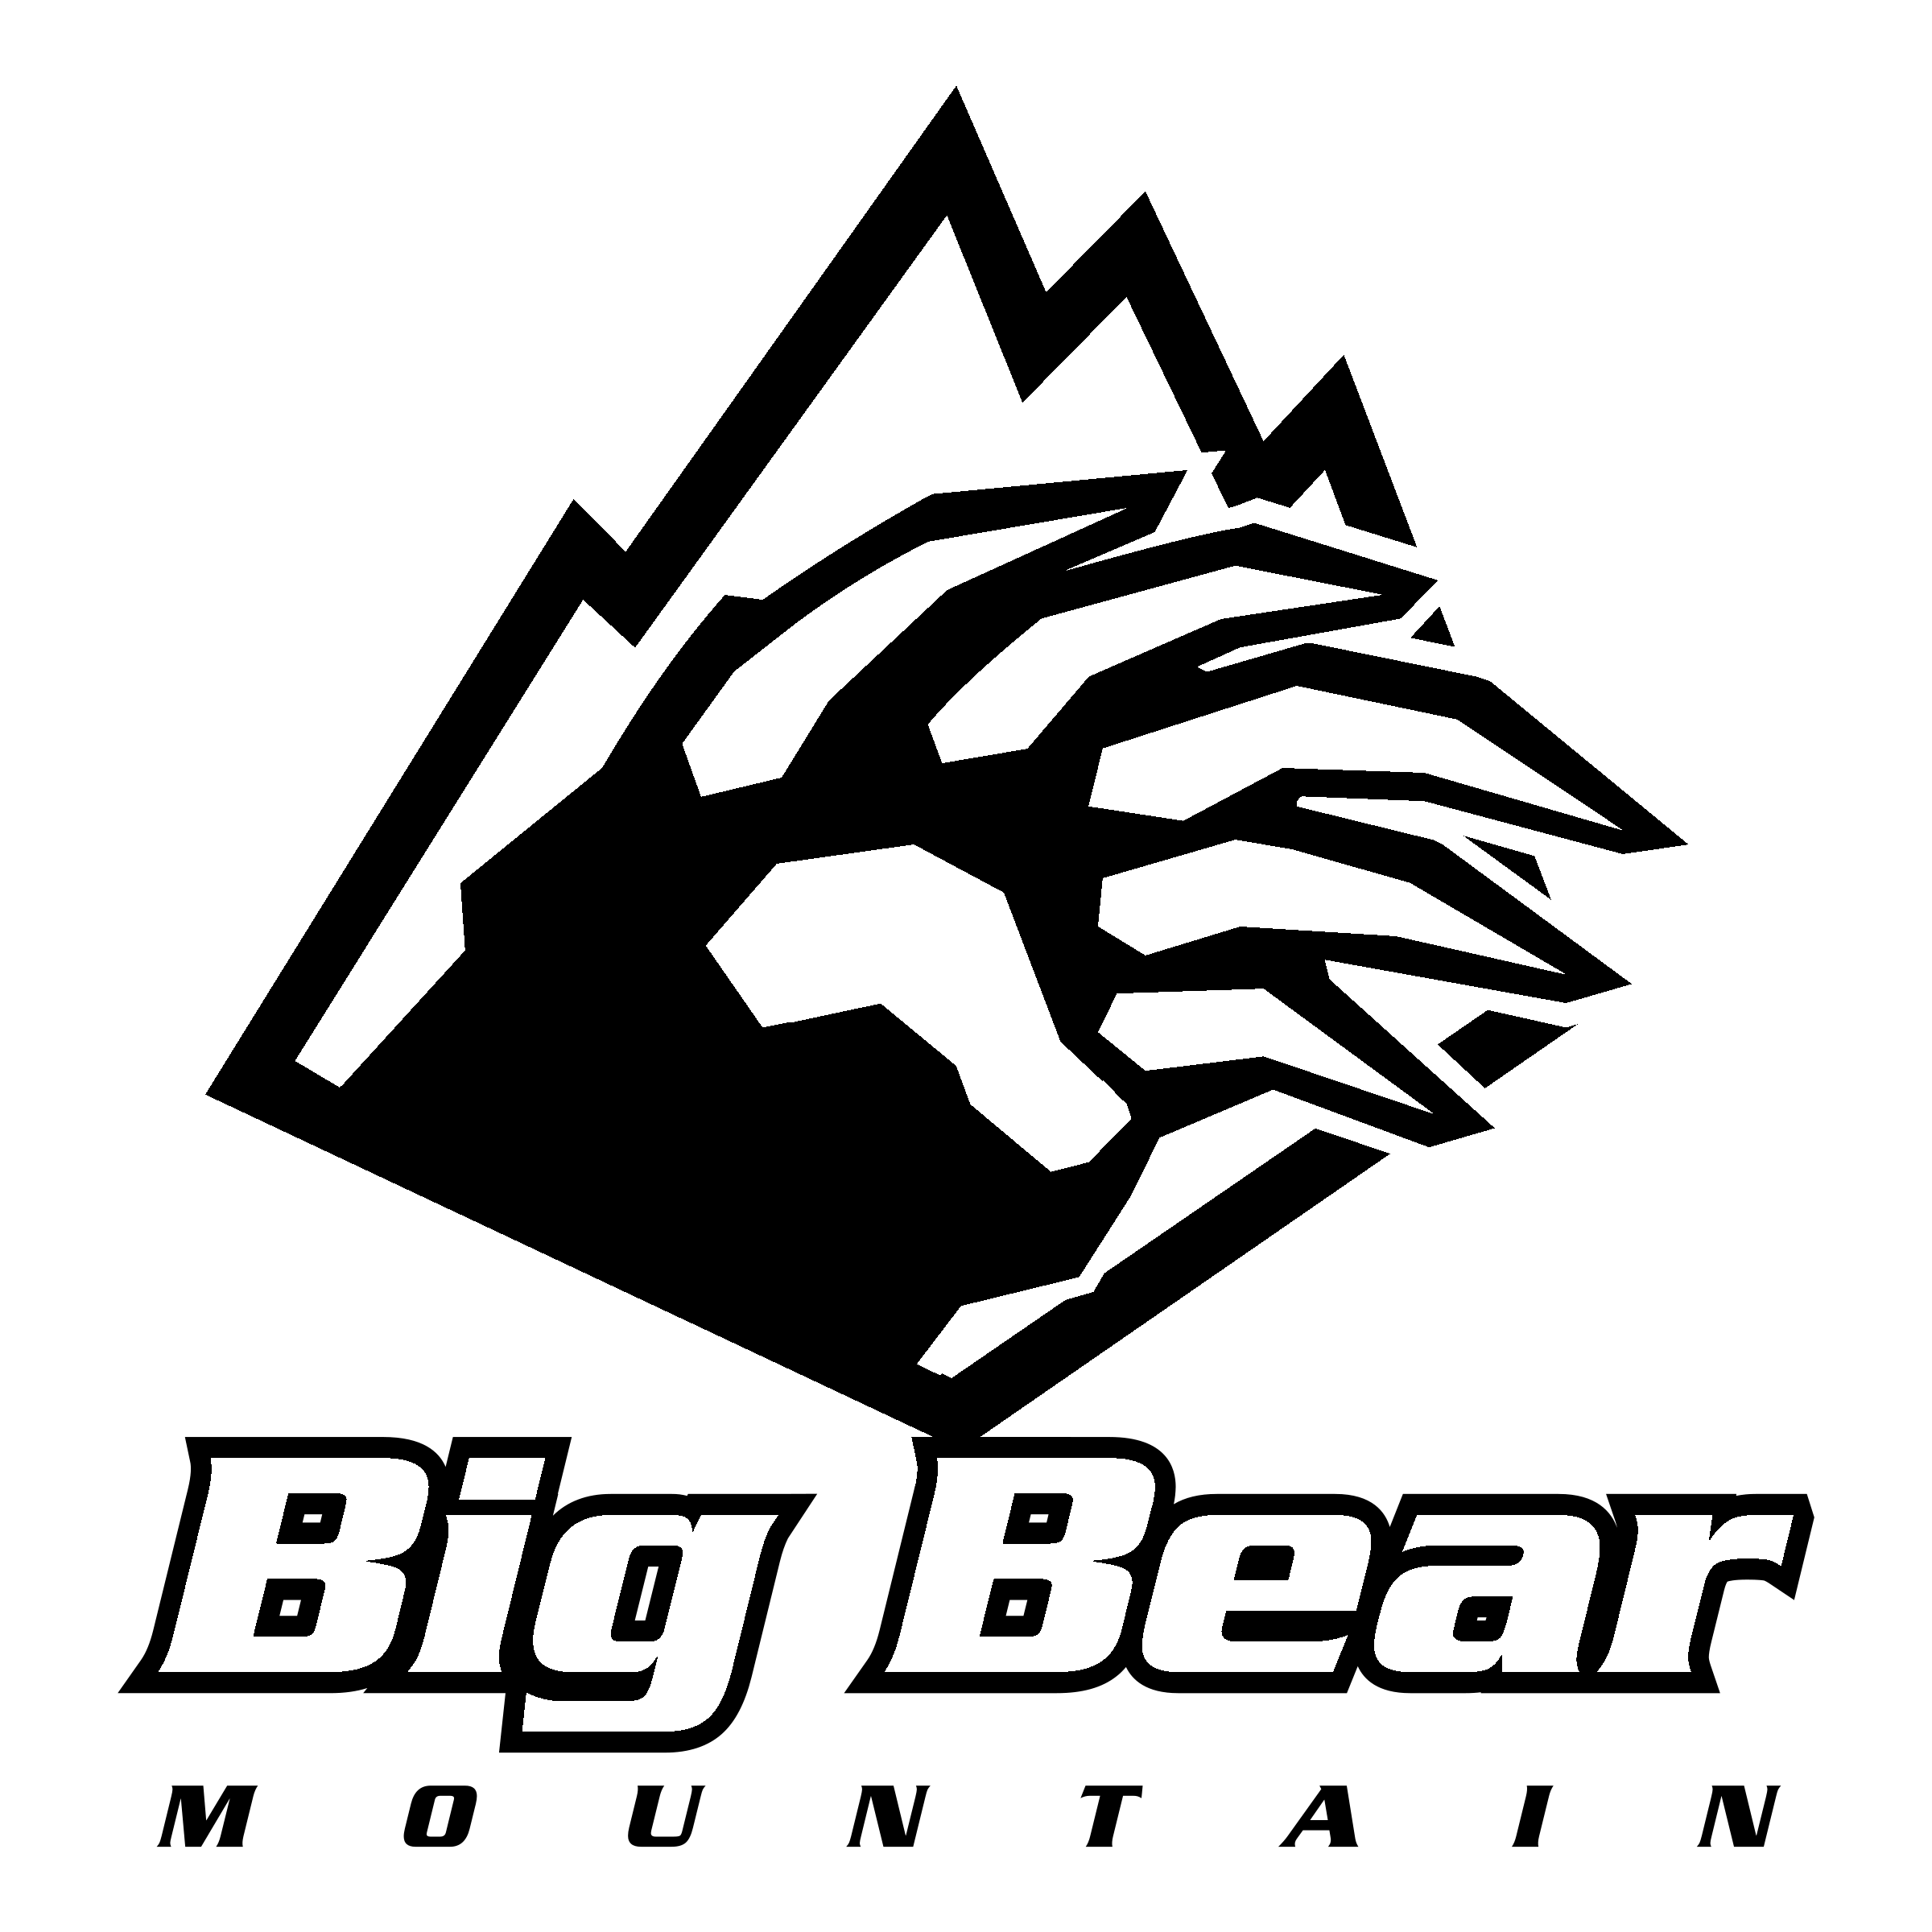 Bear Mountain Logo - Big Bear Mountain Logo PNG Transparent & SVG Vector - Freebie Supply